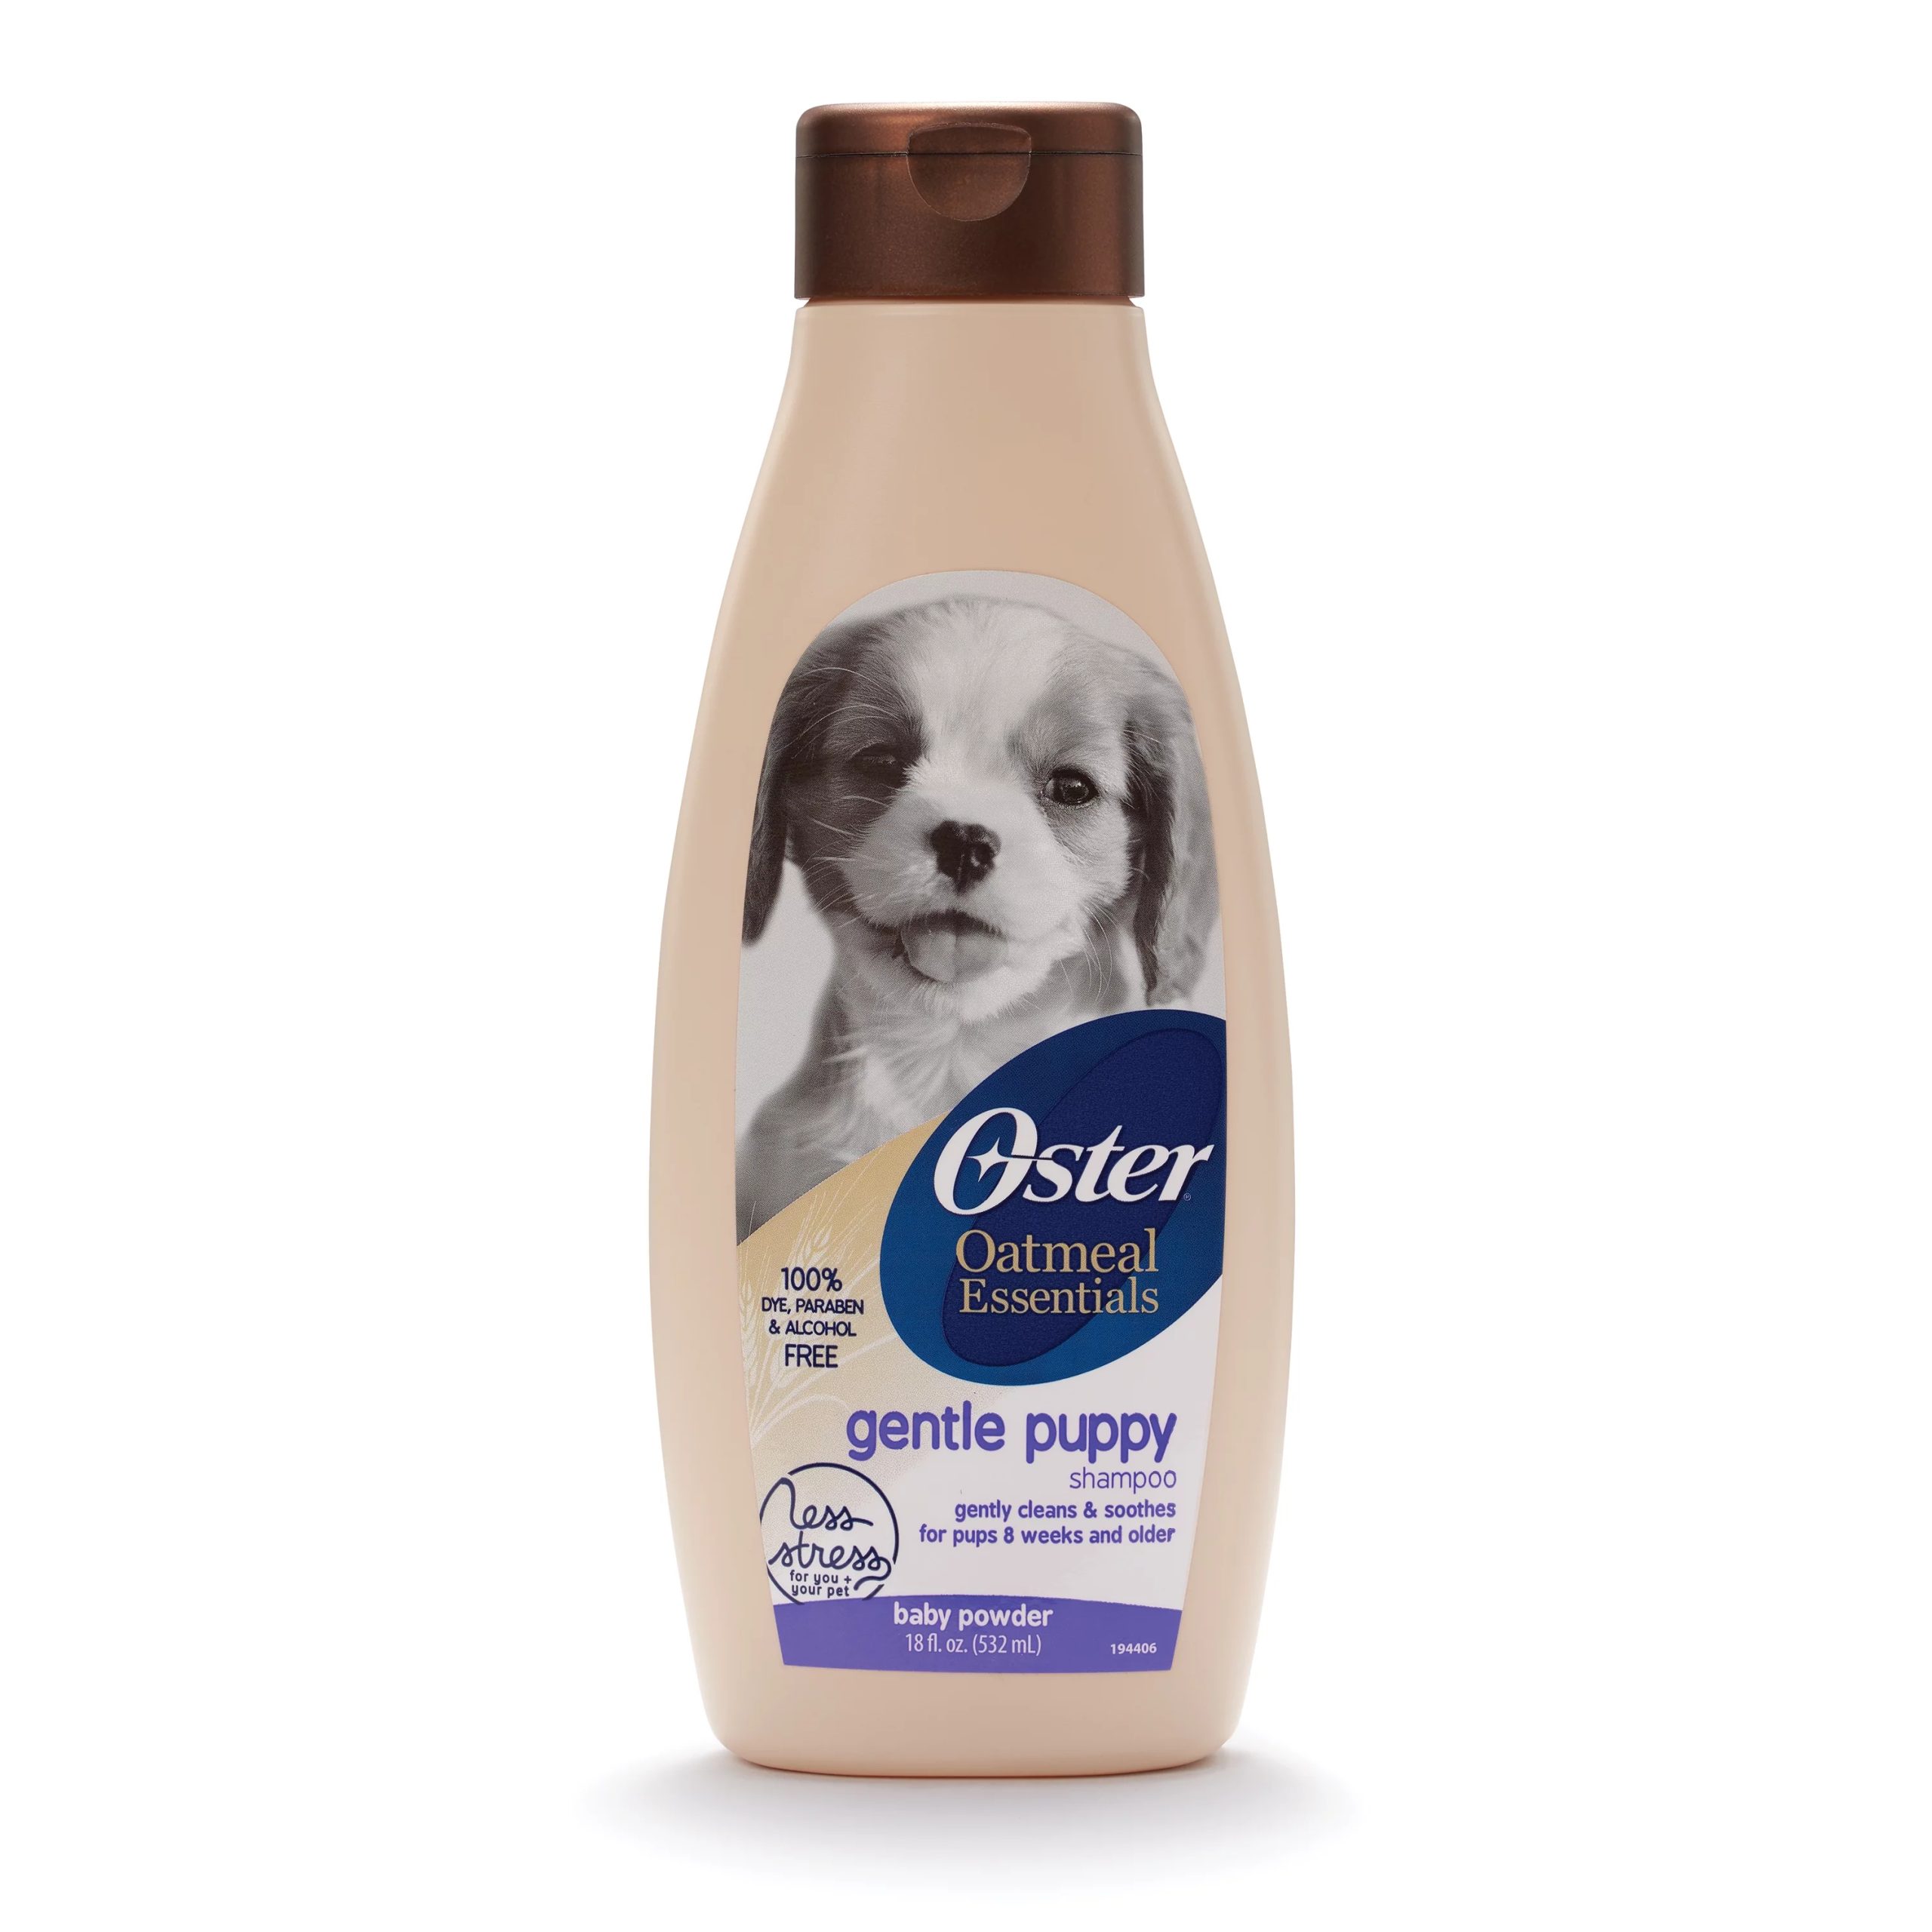 Oster Oatmeal Naturals Gentle Puppy Shampoo